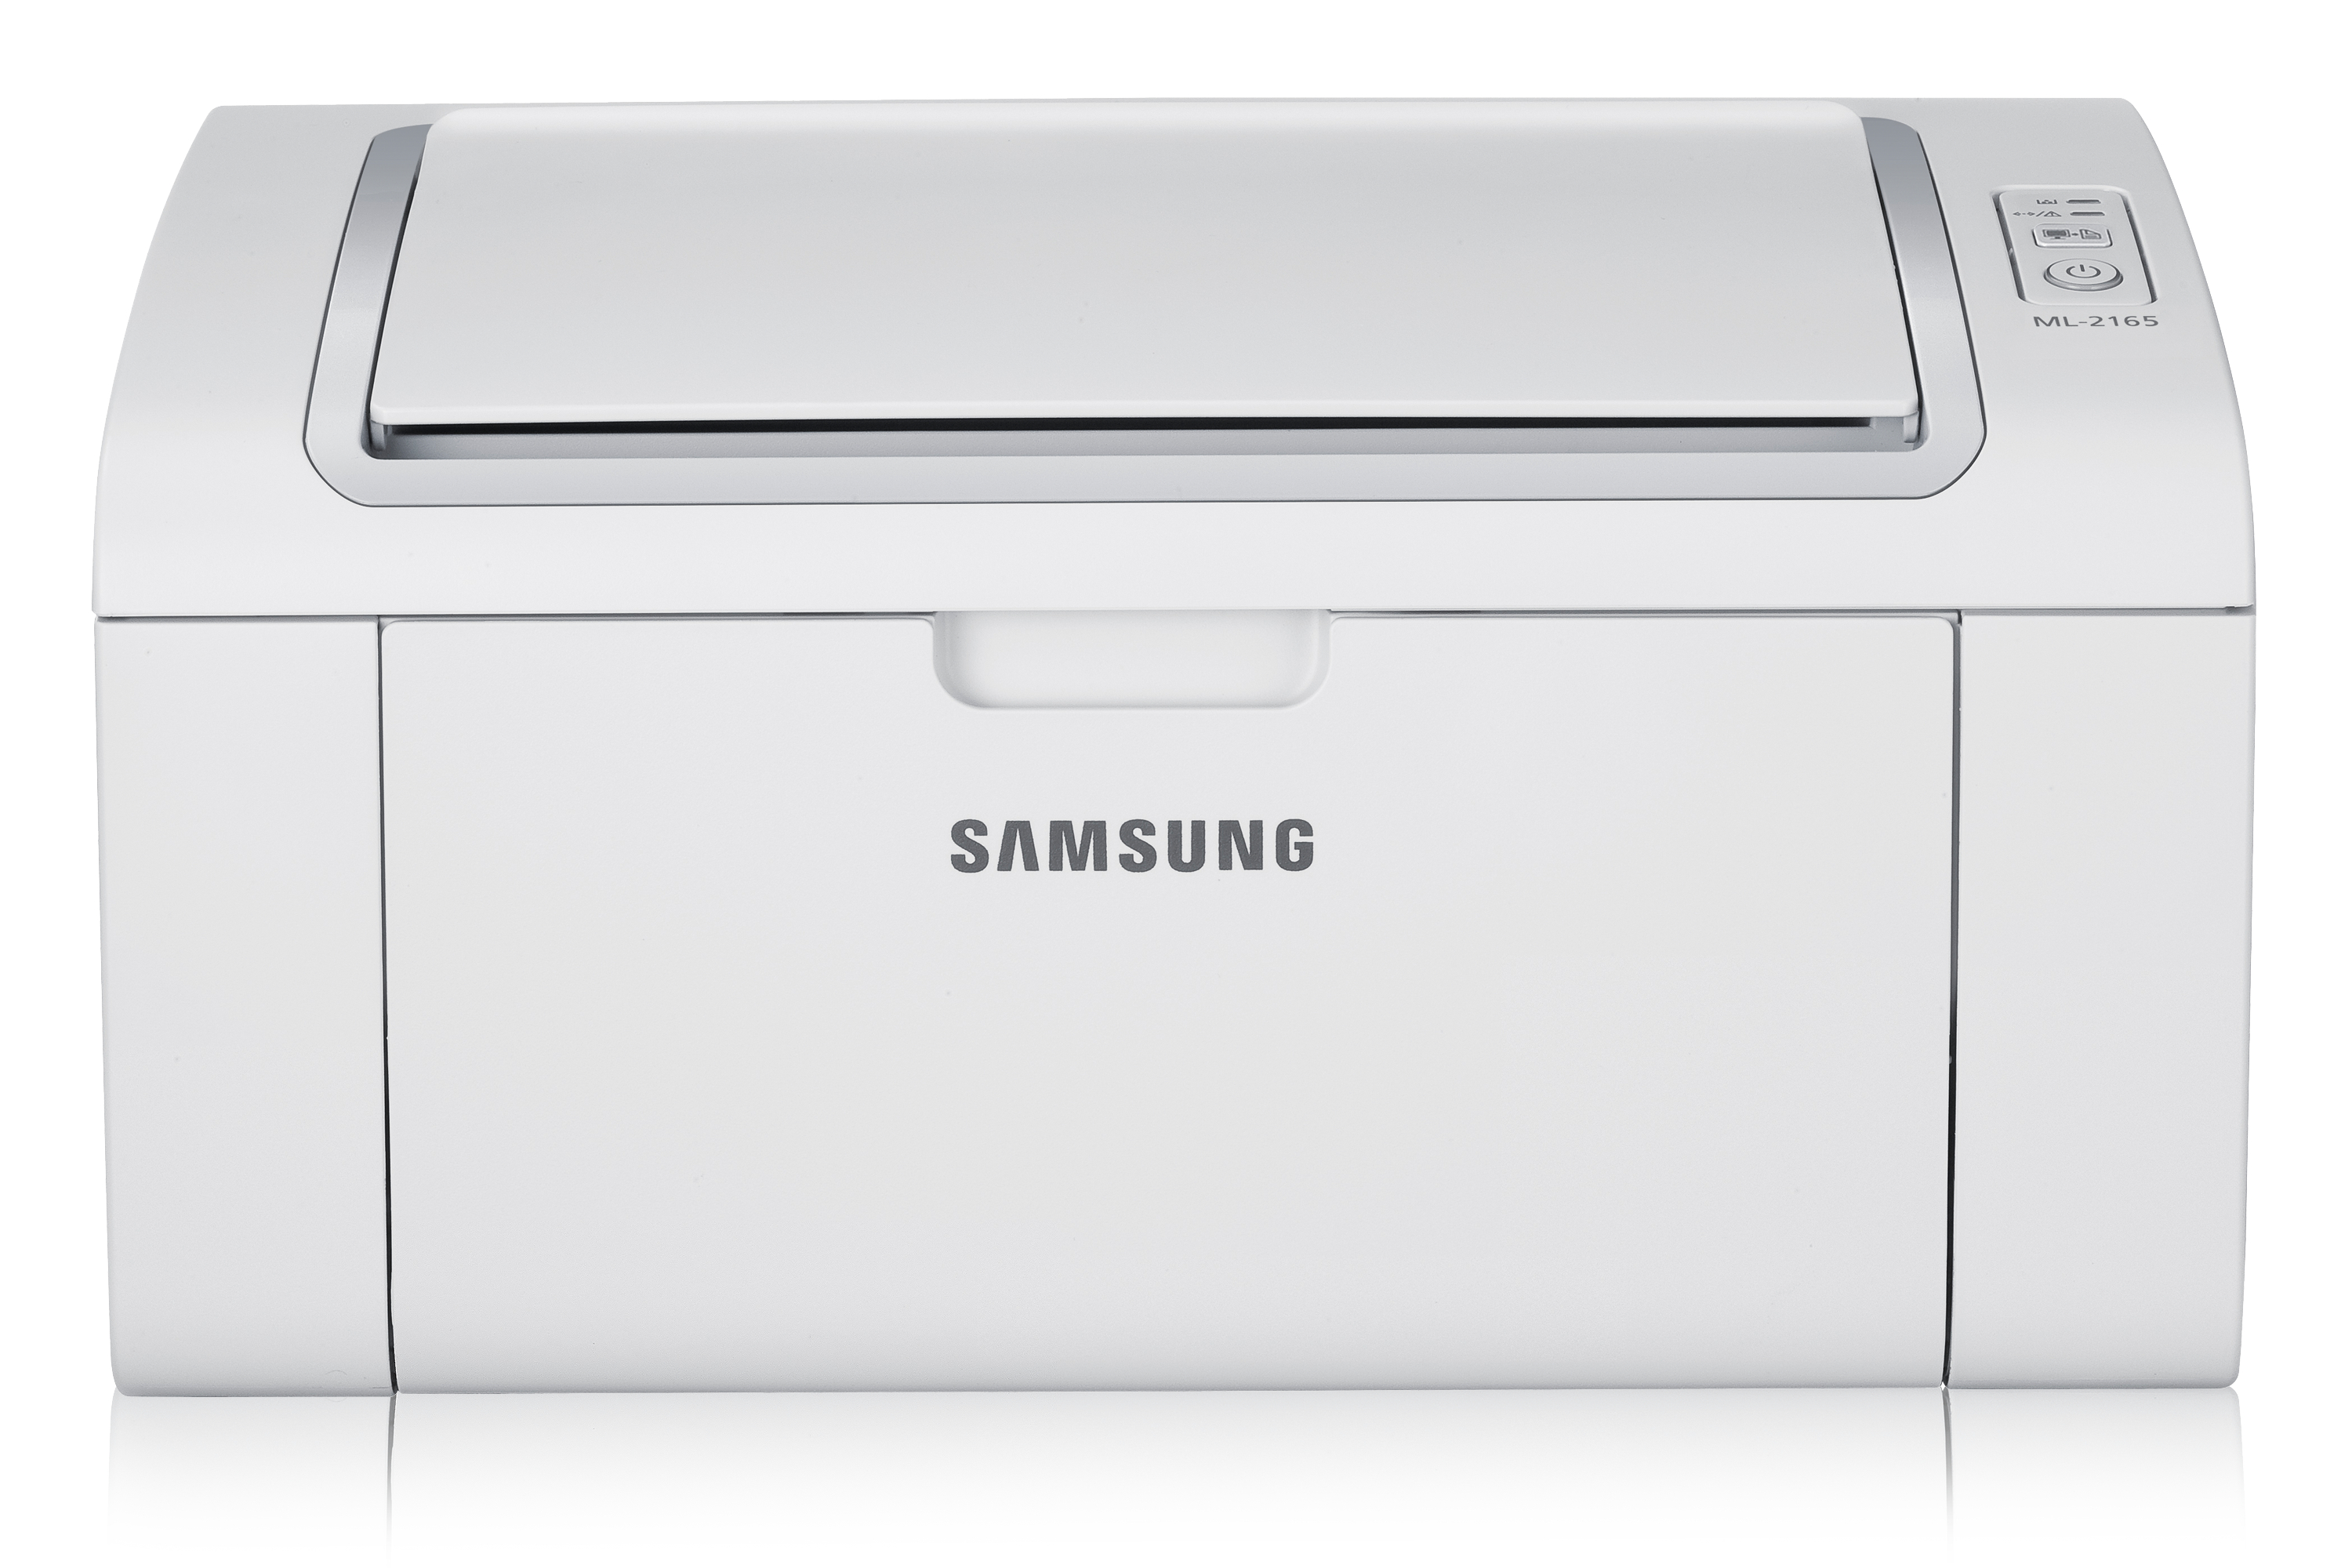 Samsung Mono Laser printer ML-2166W